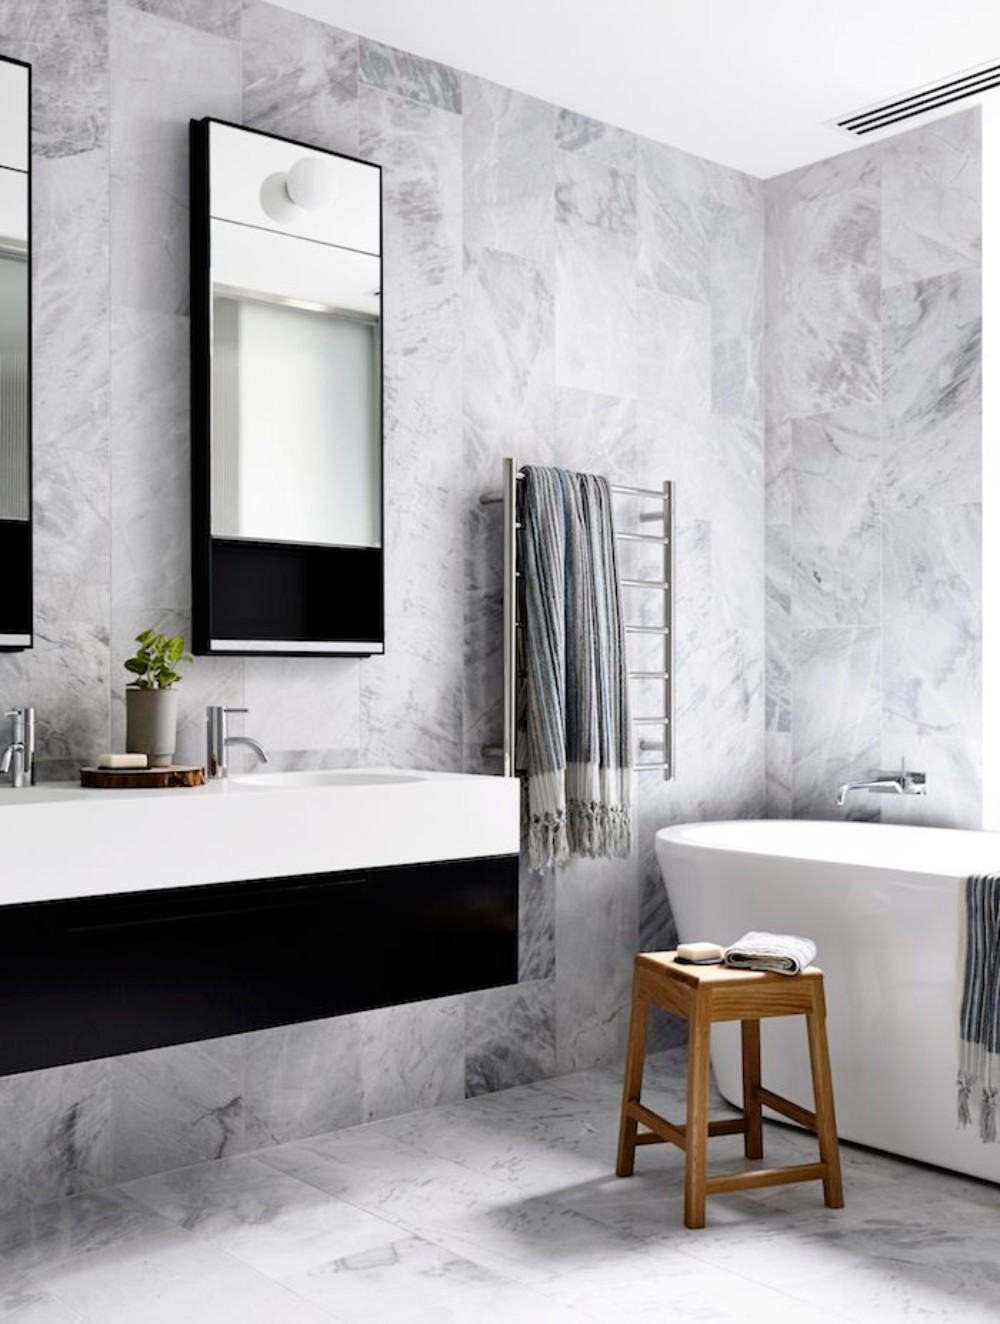 Black And White Bathroom Decor
 Get Inspired with 25 Black and White Bathroom Design Ideas